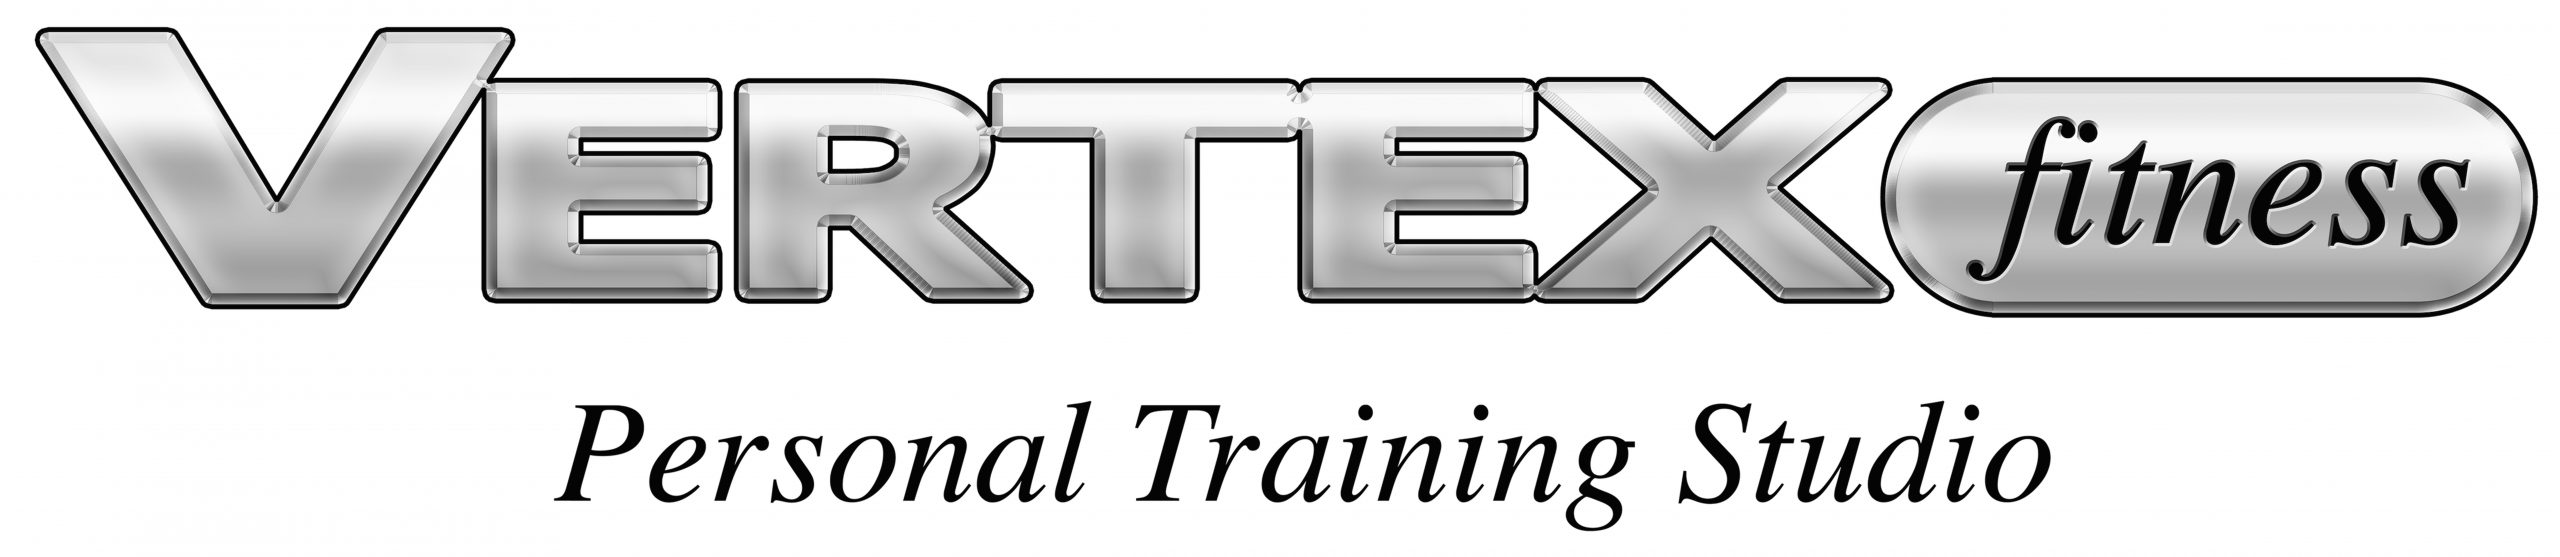 Tight IT Band? - Vertex Fitness Personal Training Studio